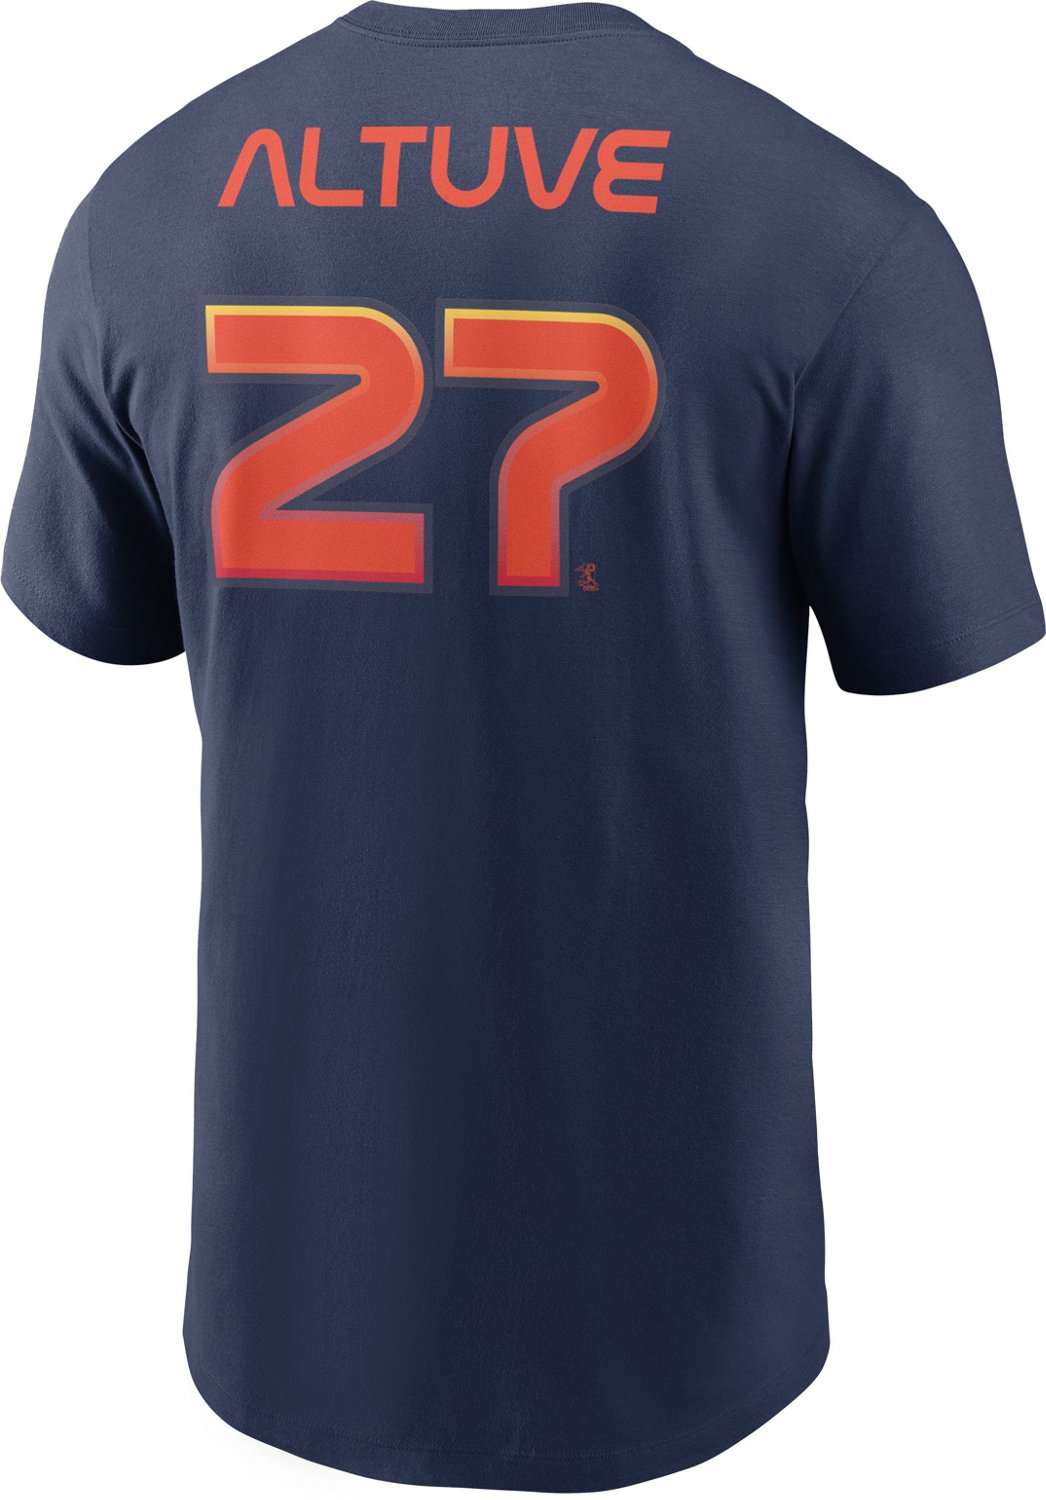 The Nike Tee Houston Astros Crew T-Shirt Mens Small Blue Orange